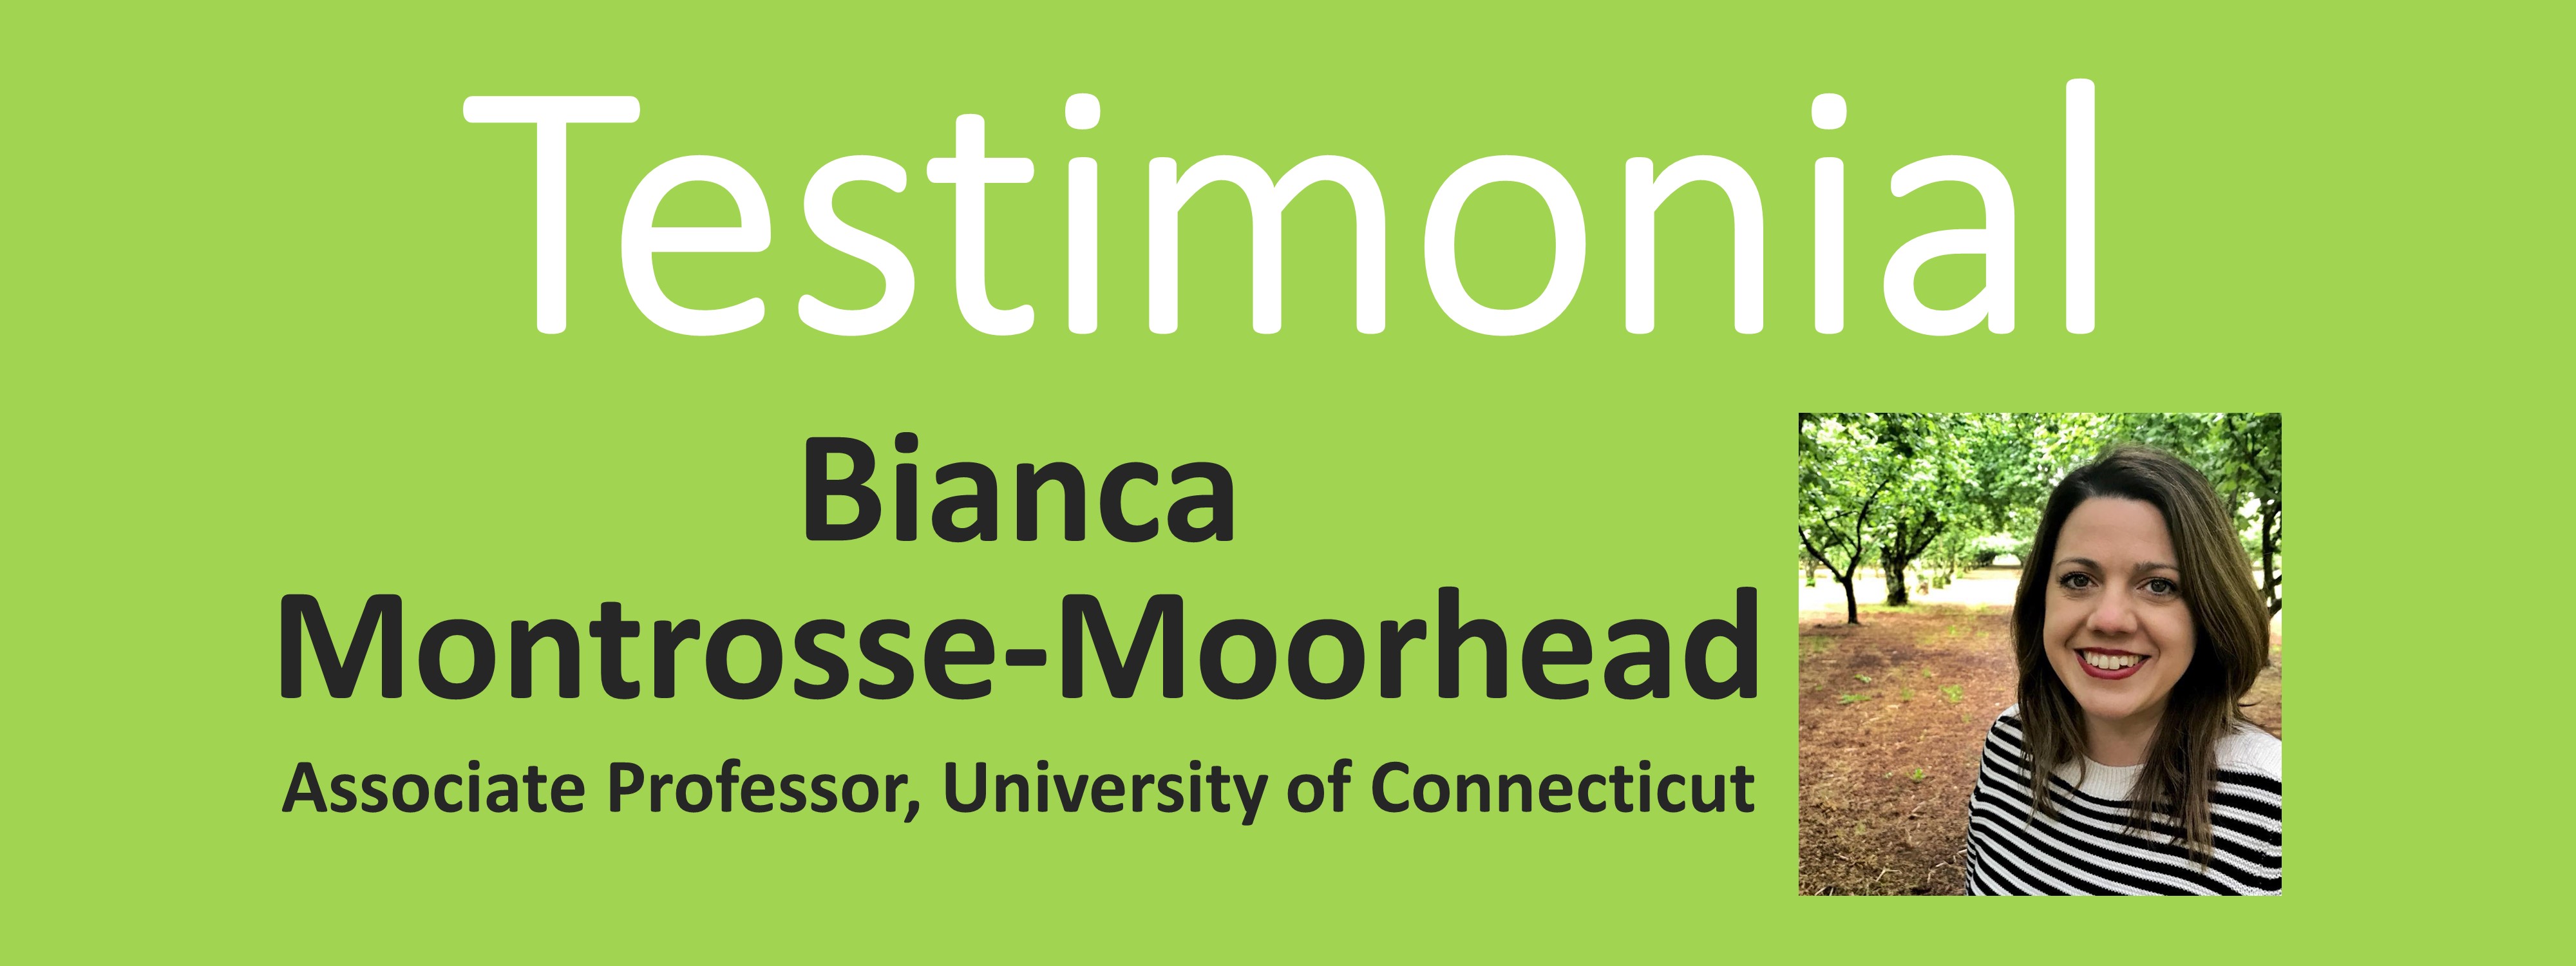 Testimonial from Bianca Montrosse-Moorhead, Associate Professor at University of Connecticu